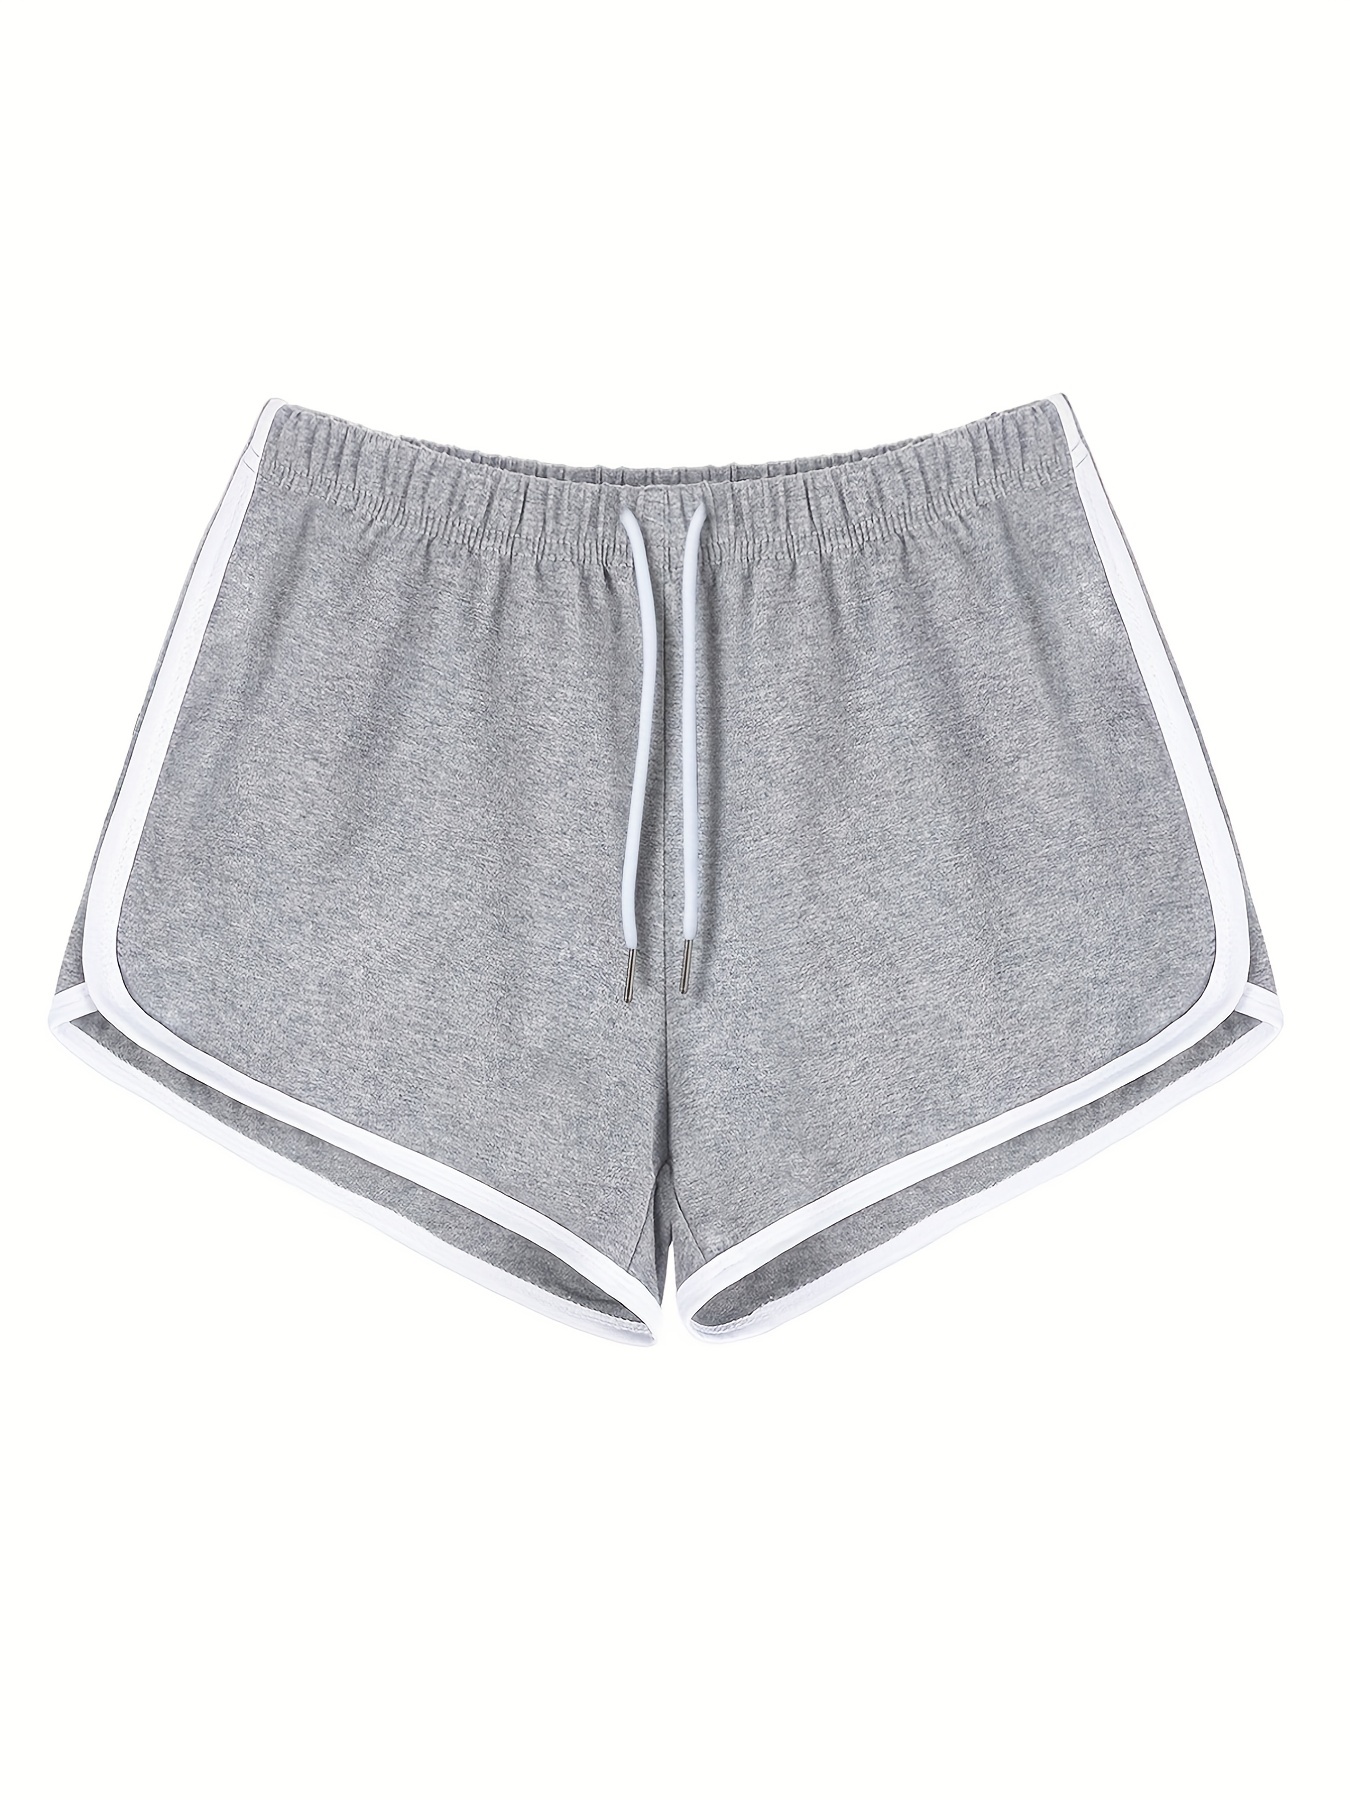 Women Shorts, Casual Loose Elastic Waist Soft Short Pants Home Sports 